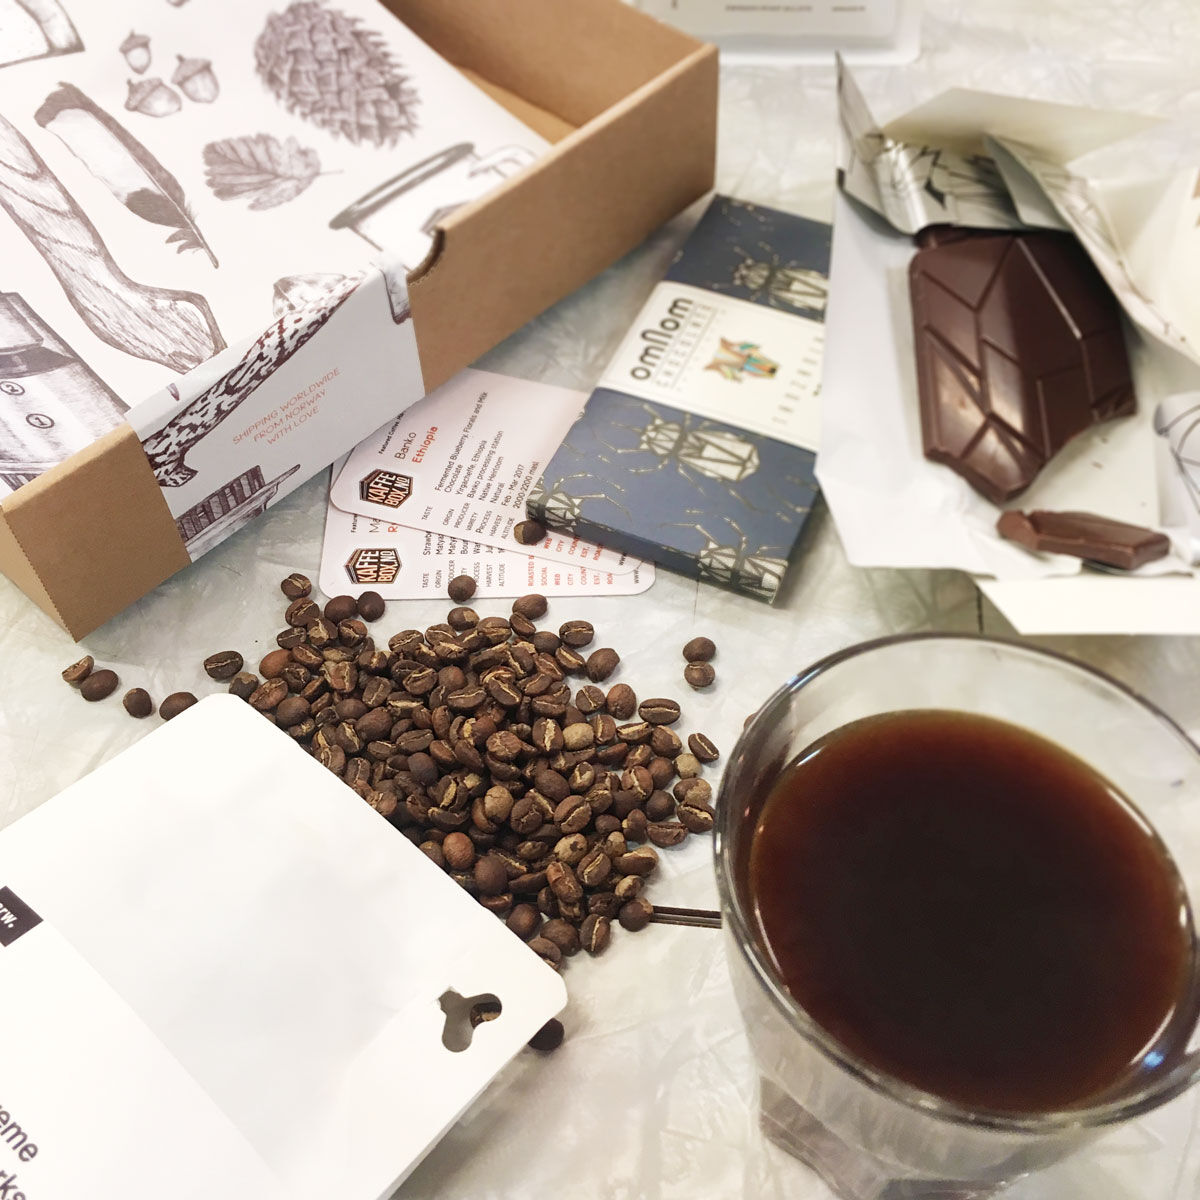 KaffeBox Chocolate Pairing Subscription - 500g, 2 bars